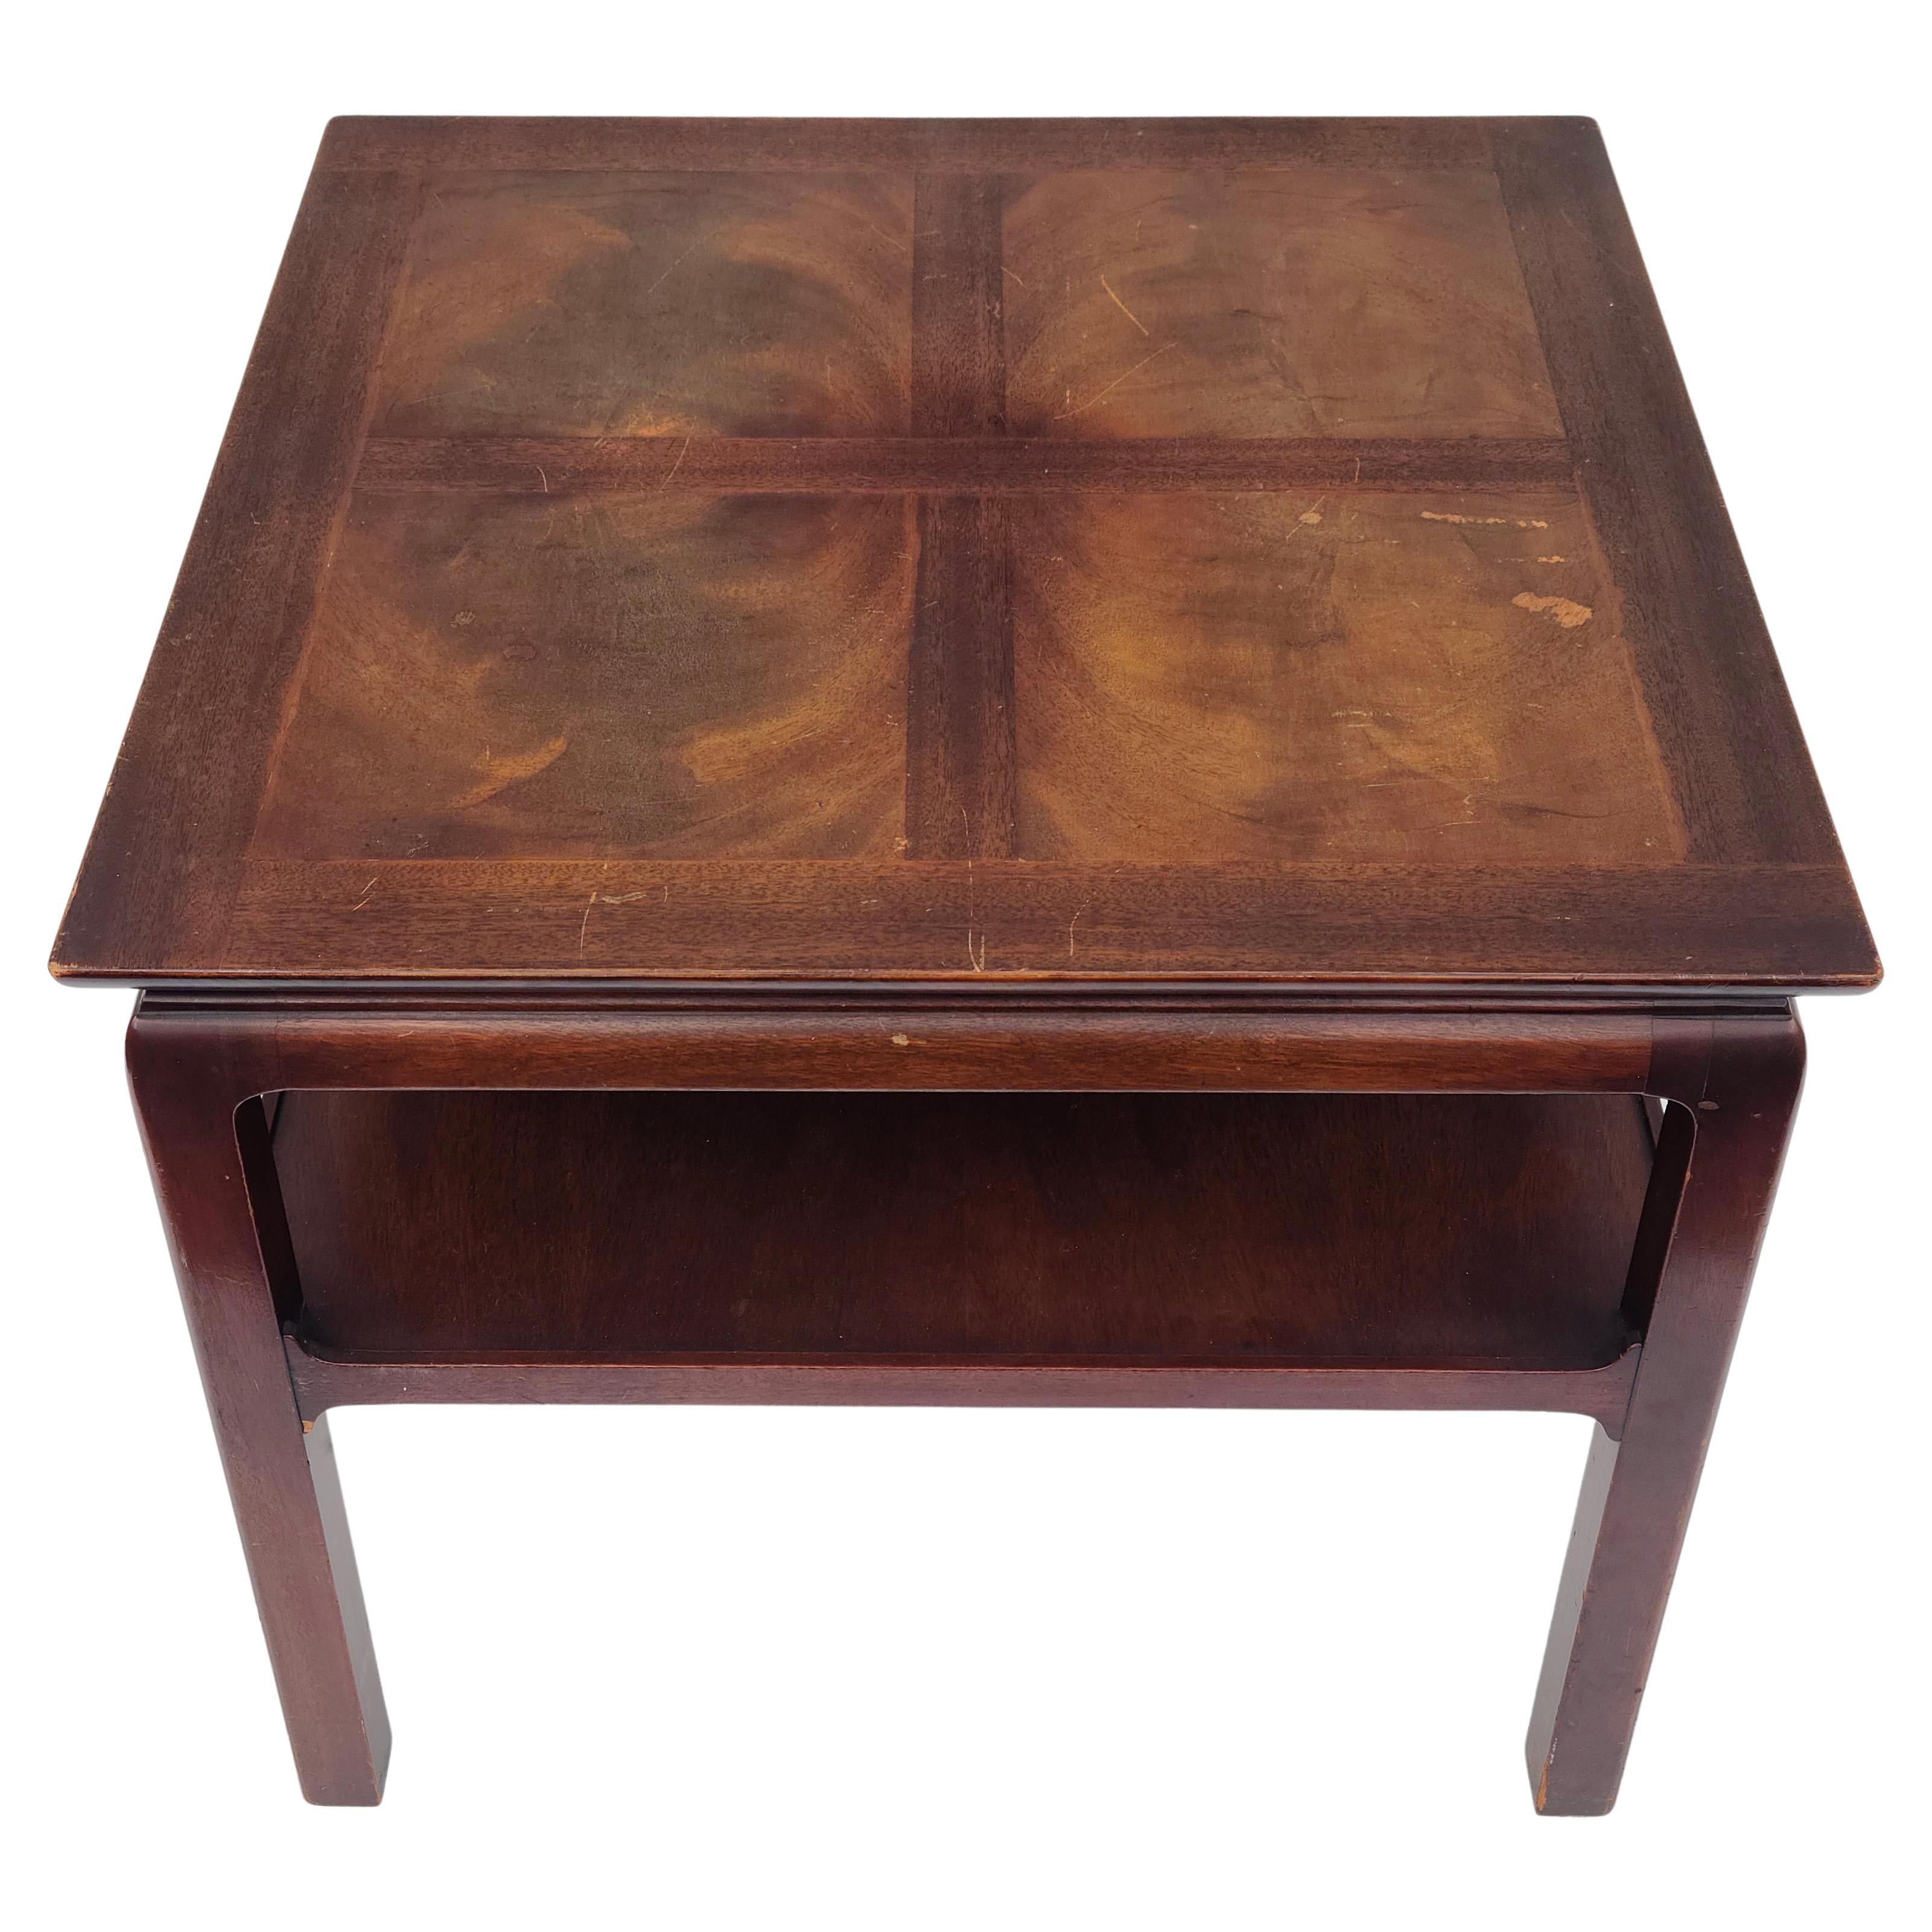 Mahogany Decorative Modern Sofa Table by Heritage Hendredon For Sale